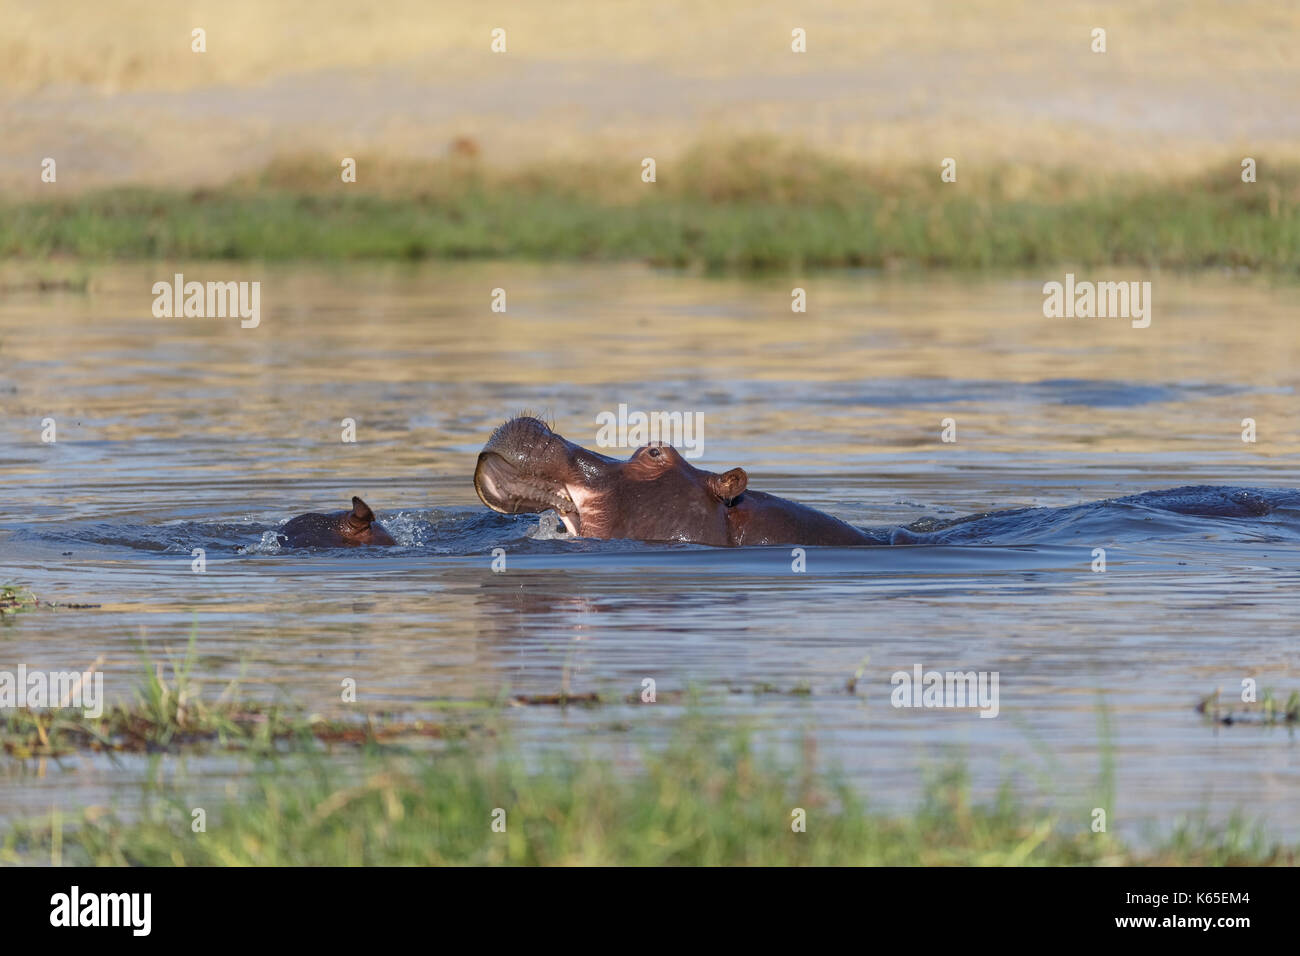 Hippo's xyoung playfighting en río Kwai, Botswana Foto de stock